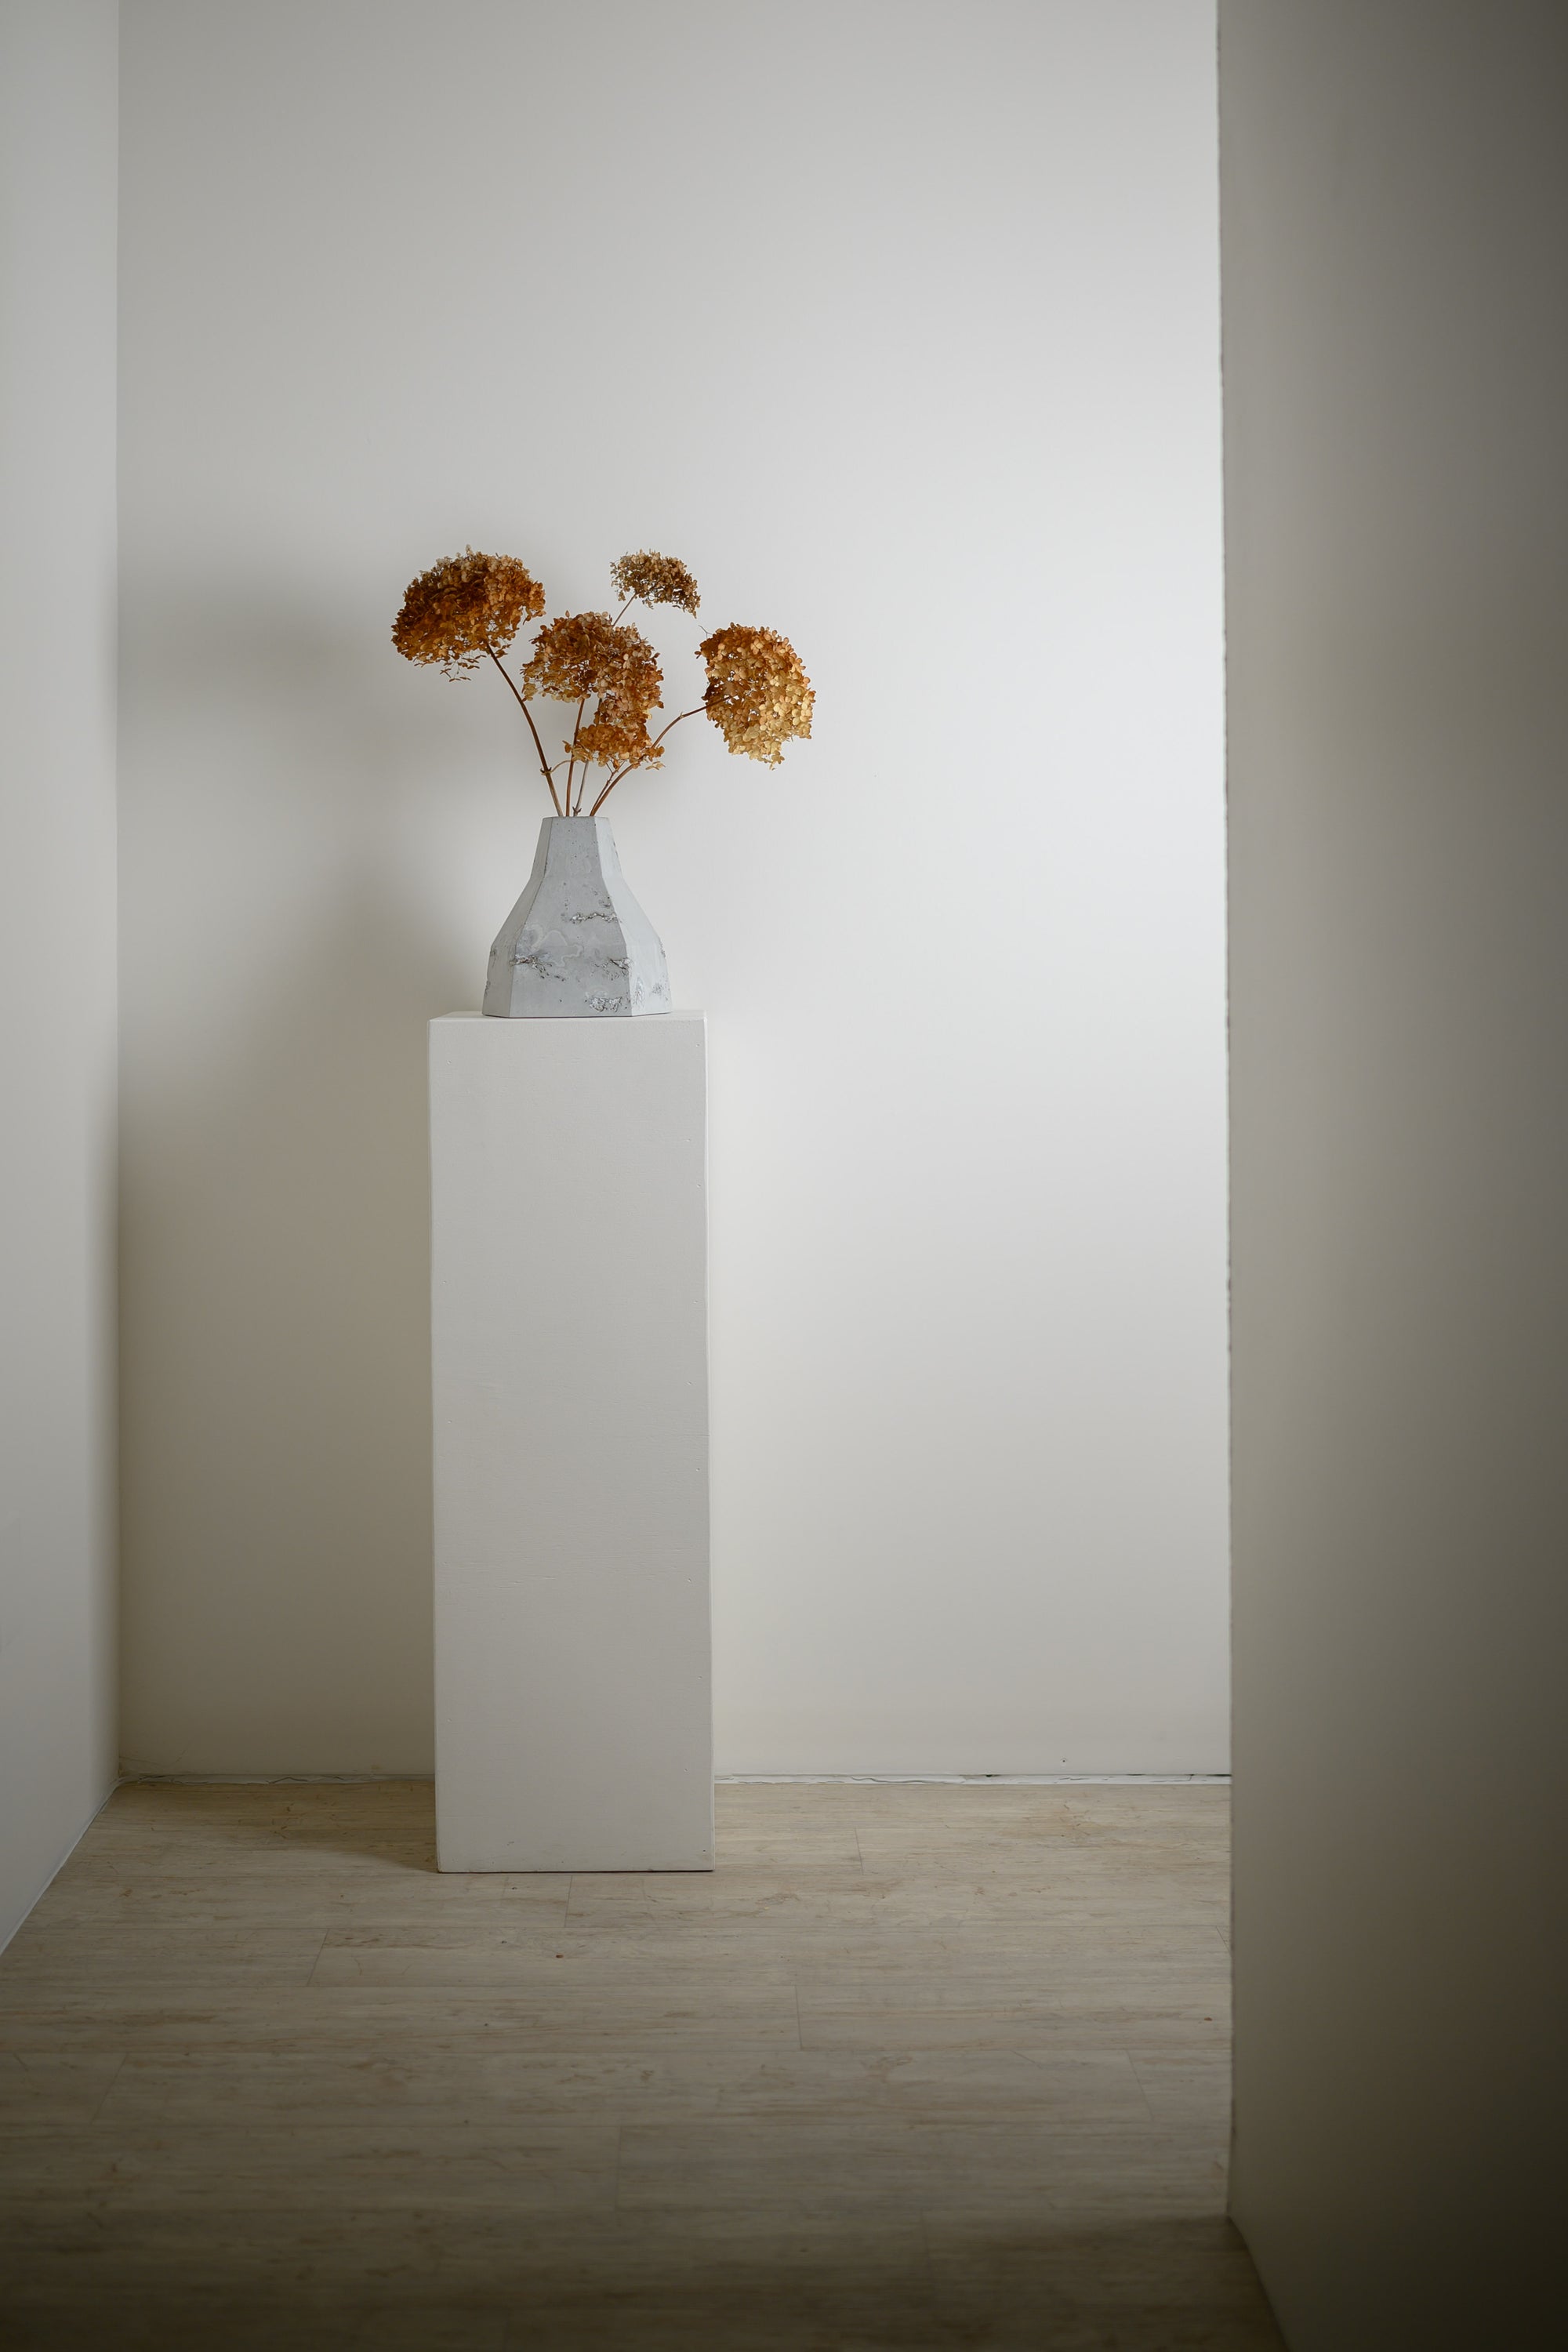 Concrete vase in hallway on white pedestal with bouquet of dried hydrangea